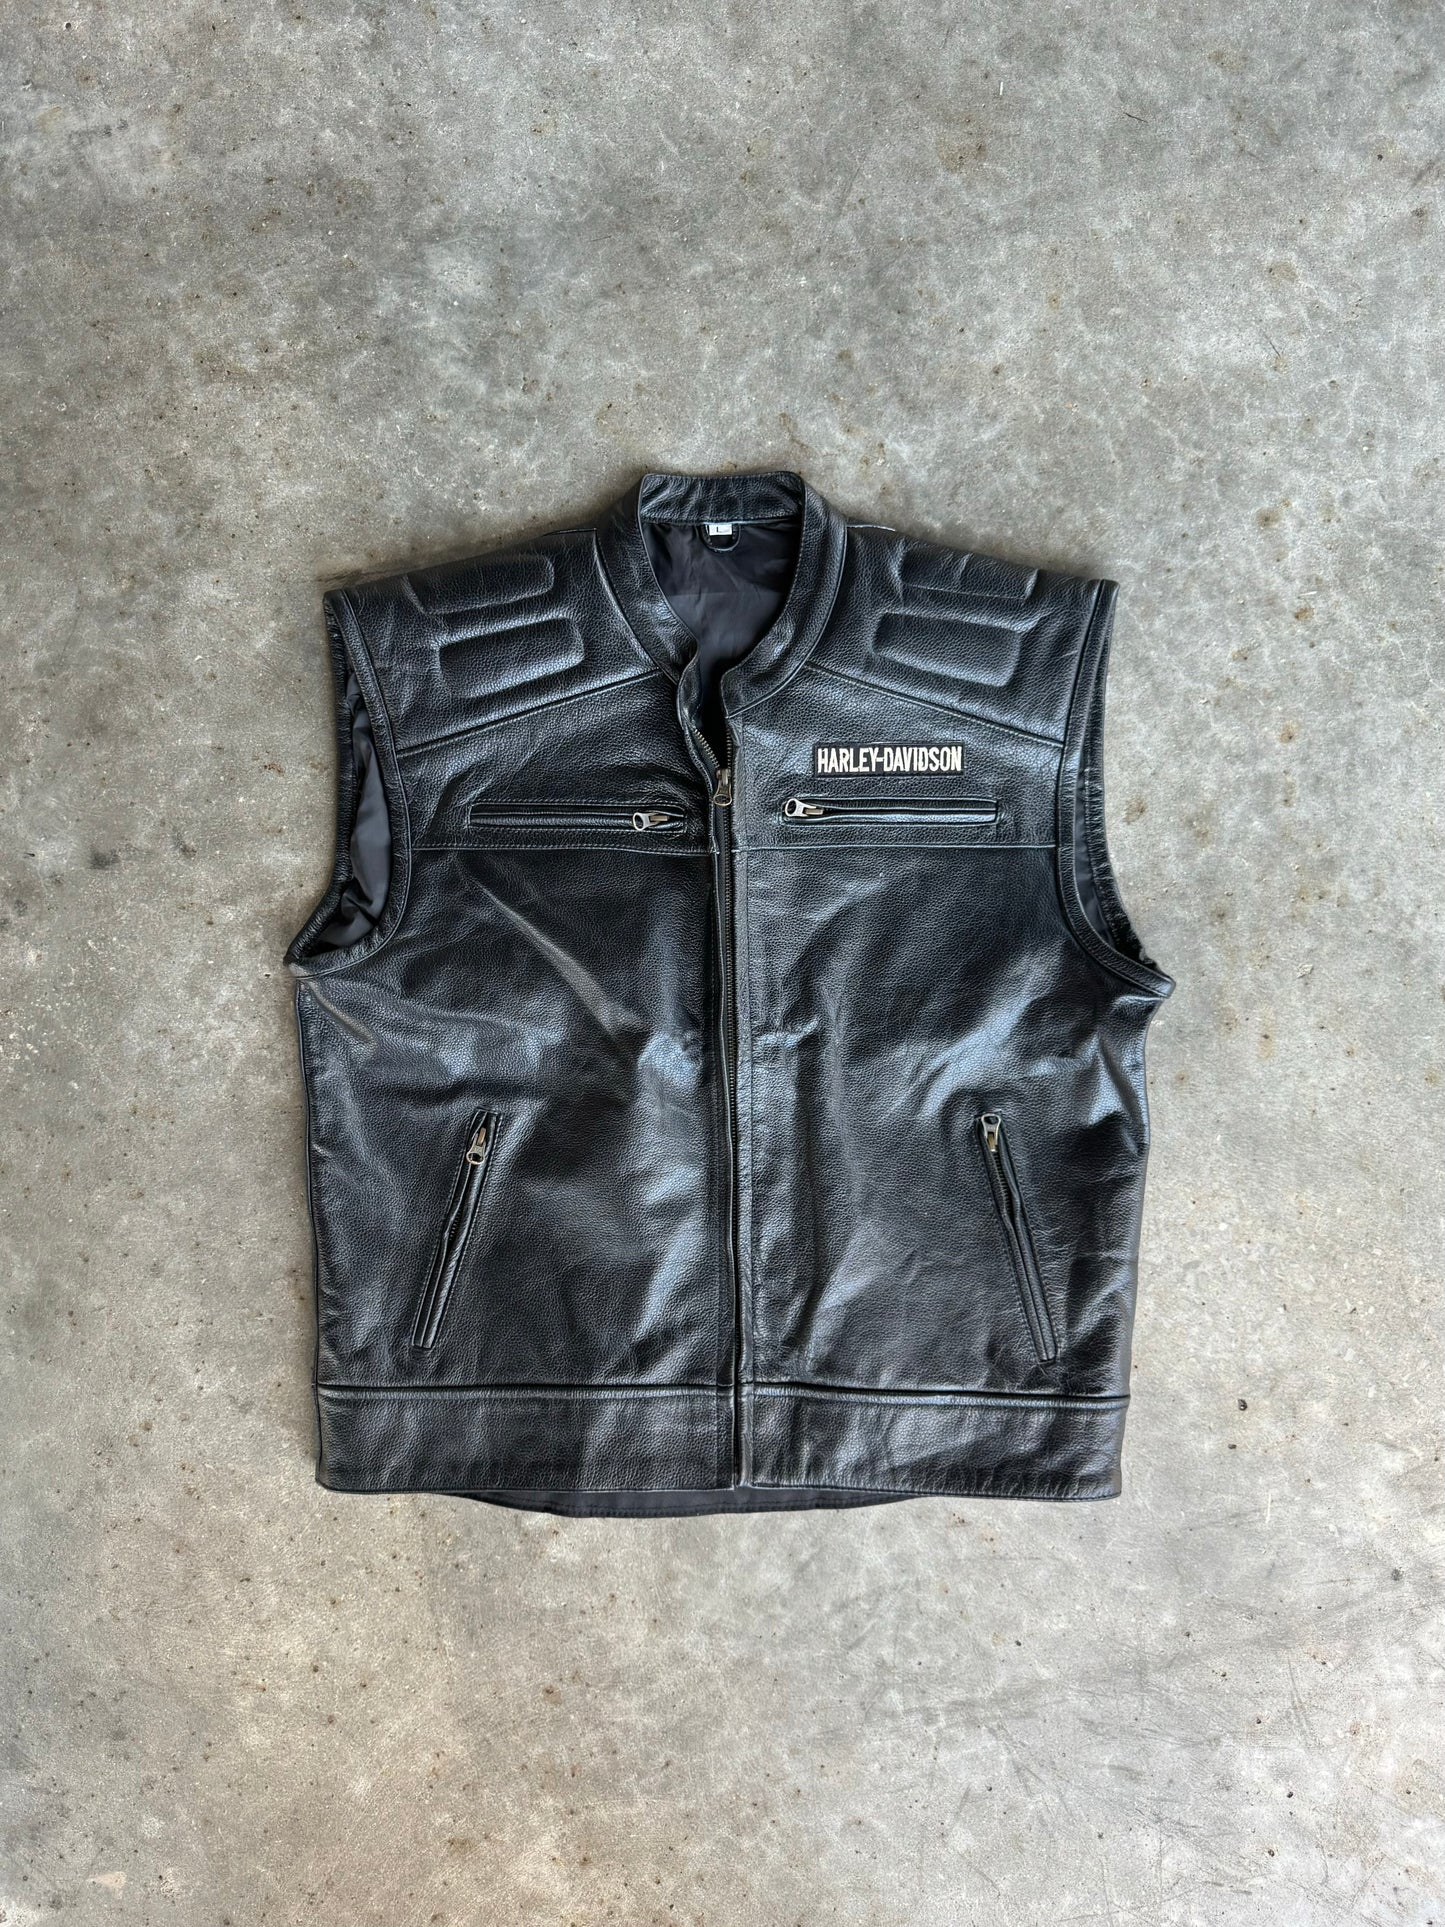 Vintage Leather Sleeveless Harley Davidson Jacket - L